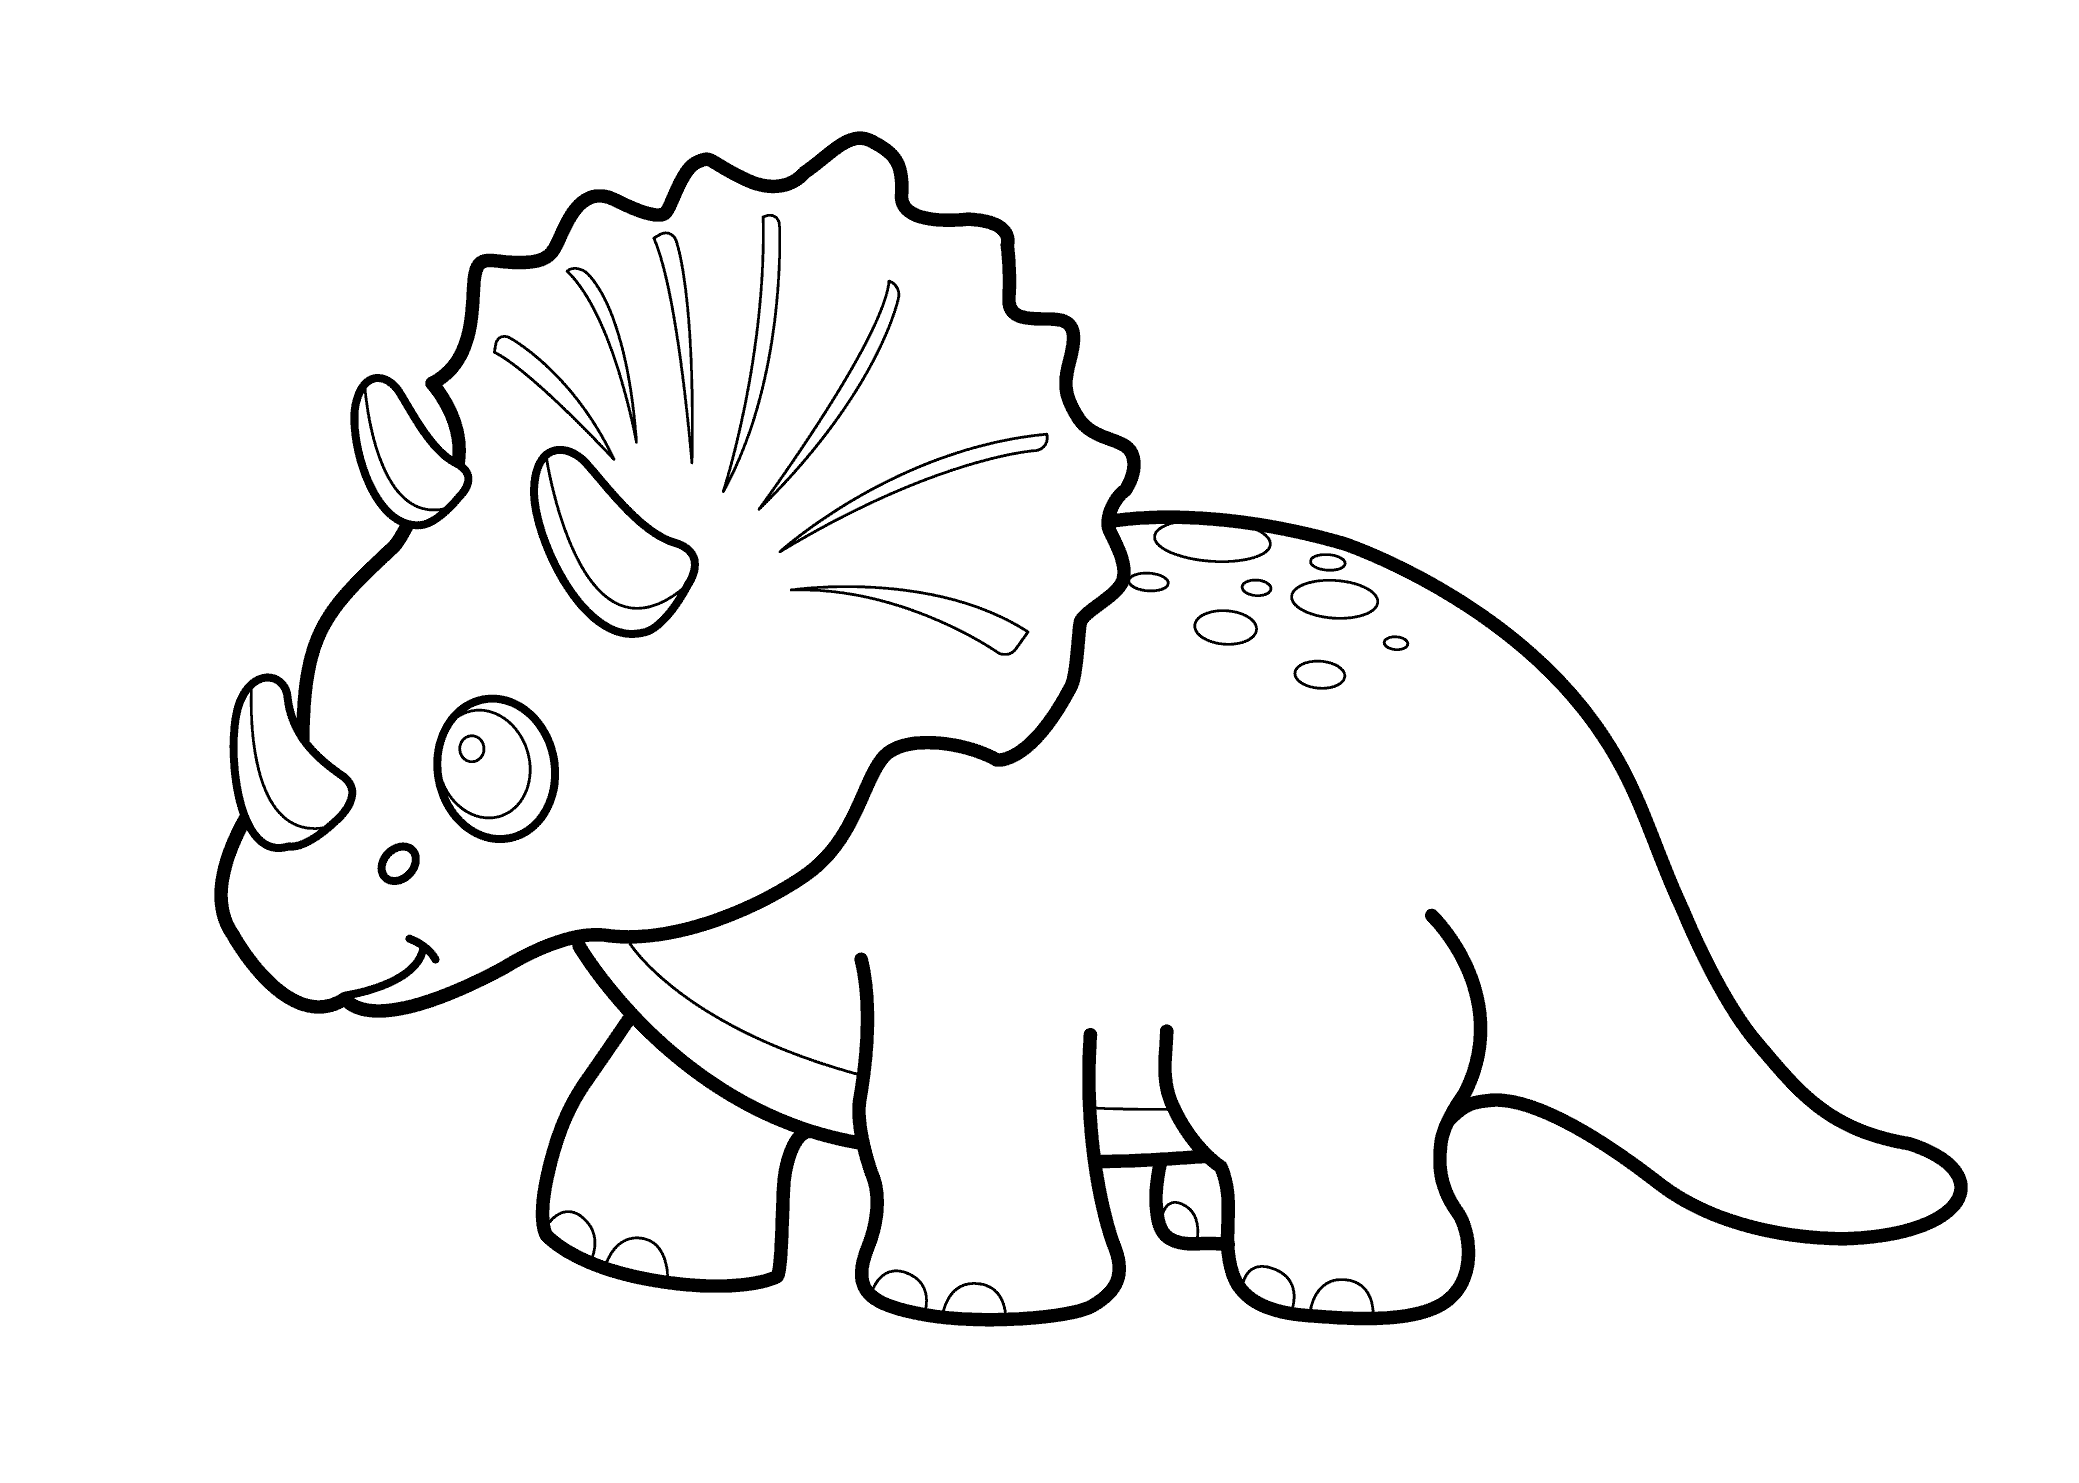 dinosaur drawing cartoon at getdrawings | free download